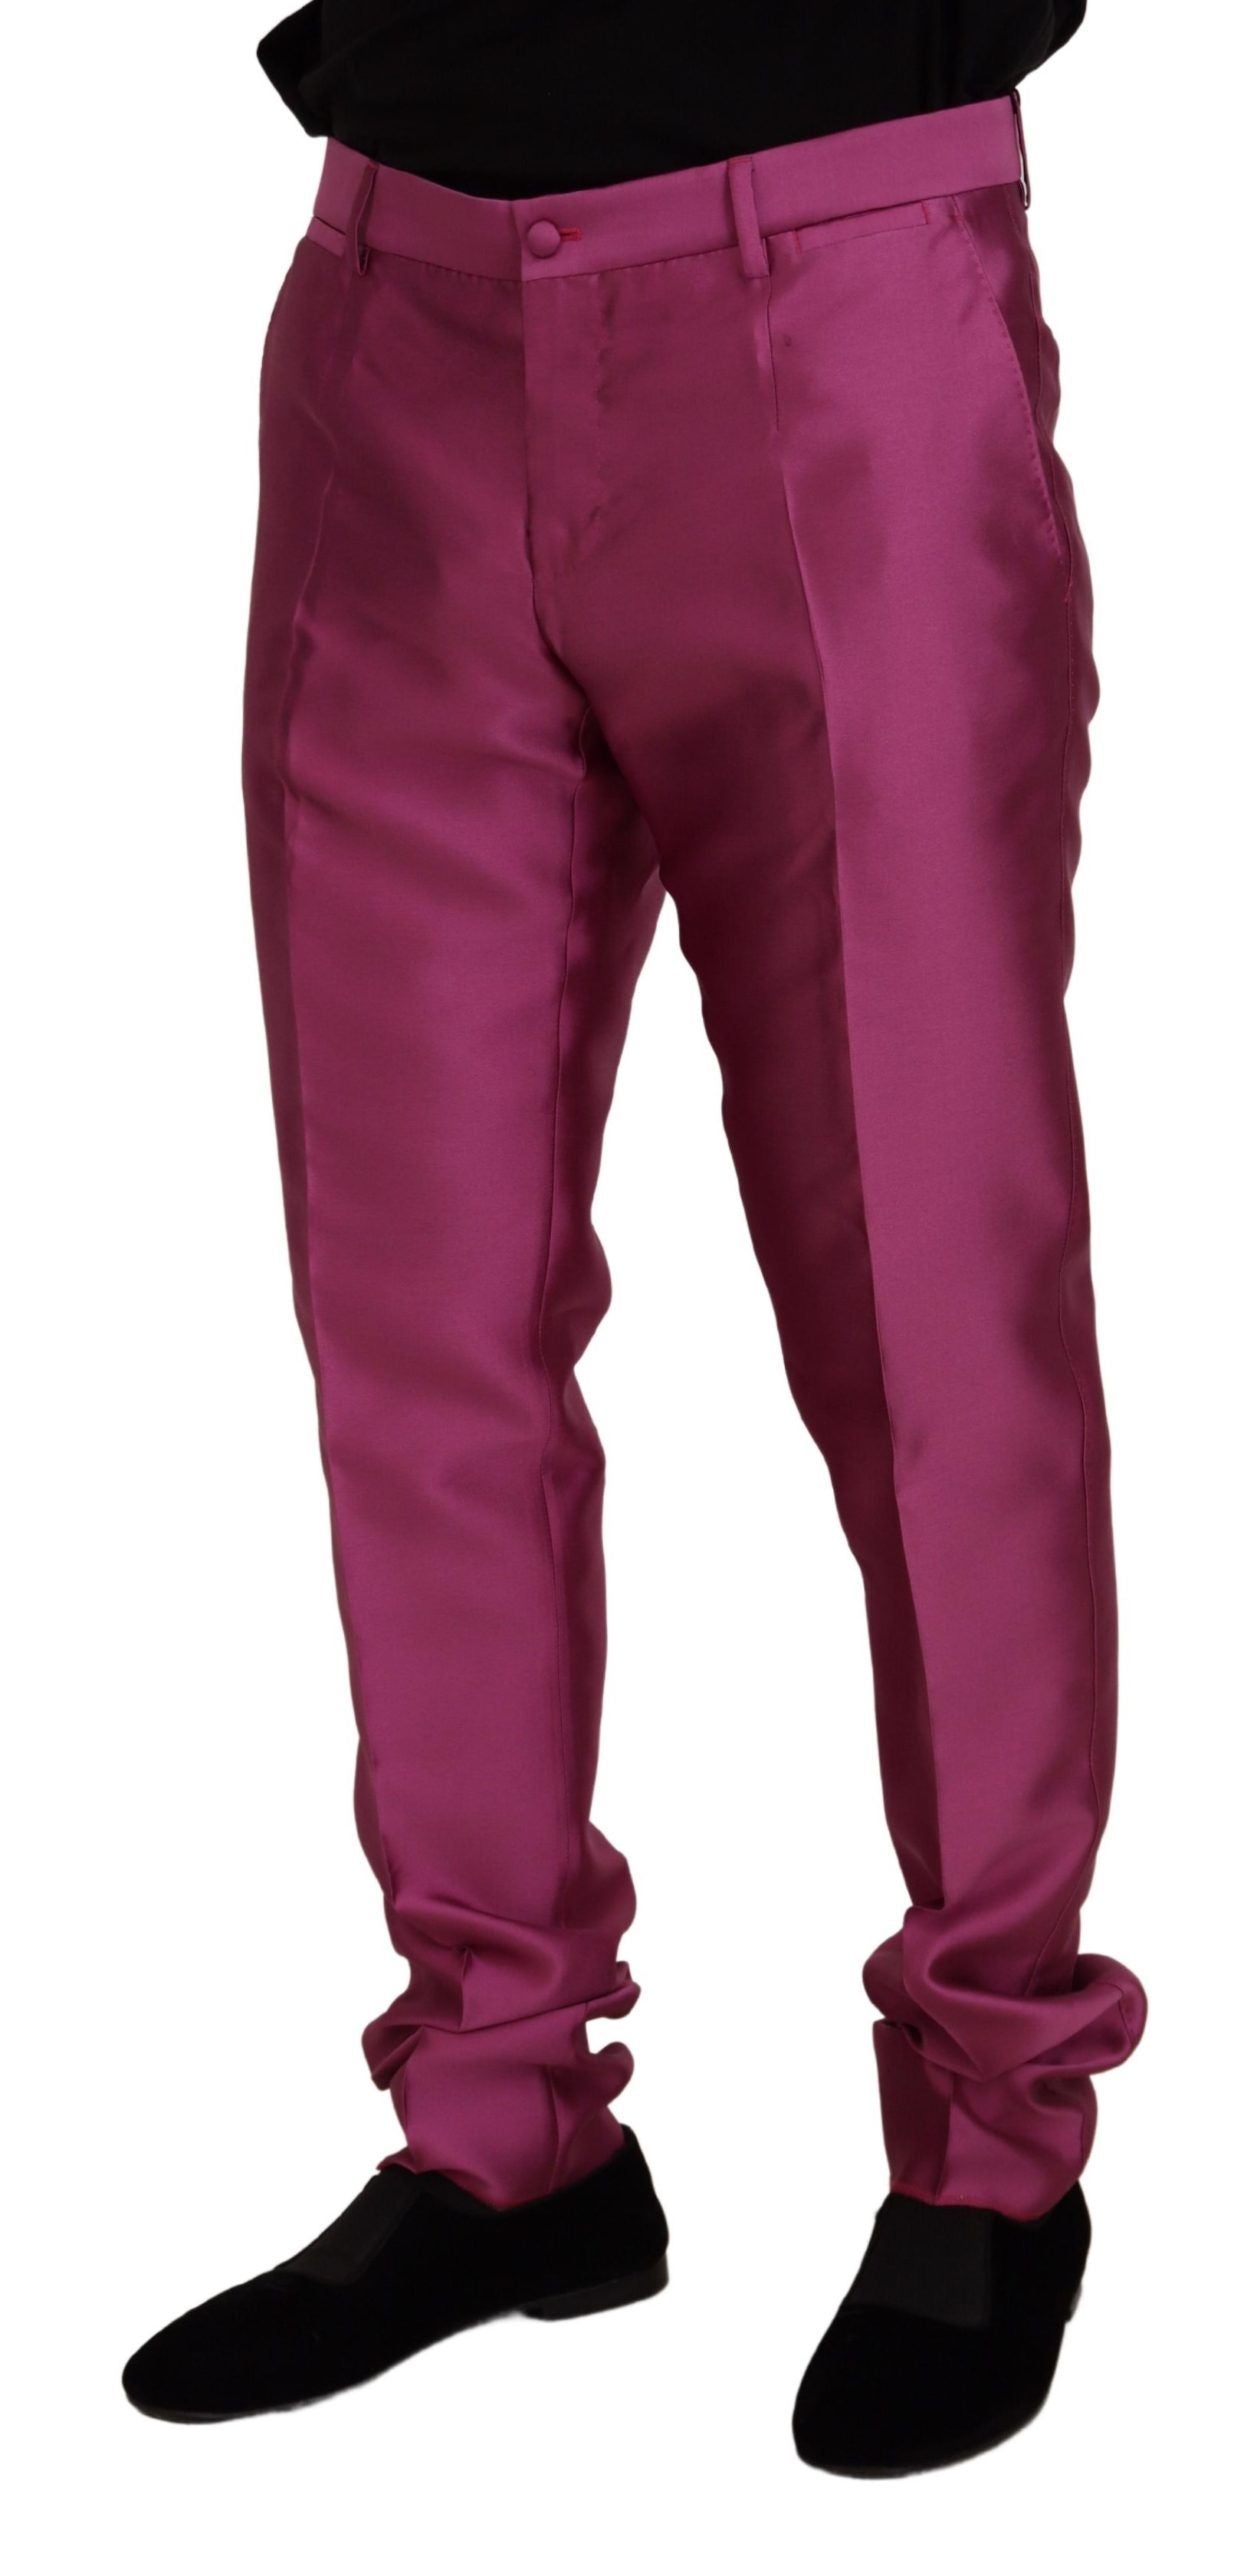 Elegant Slim Fit Formal Dress Pants in Pink